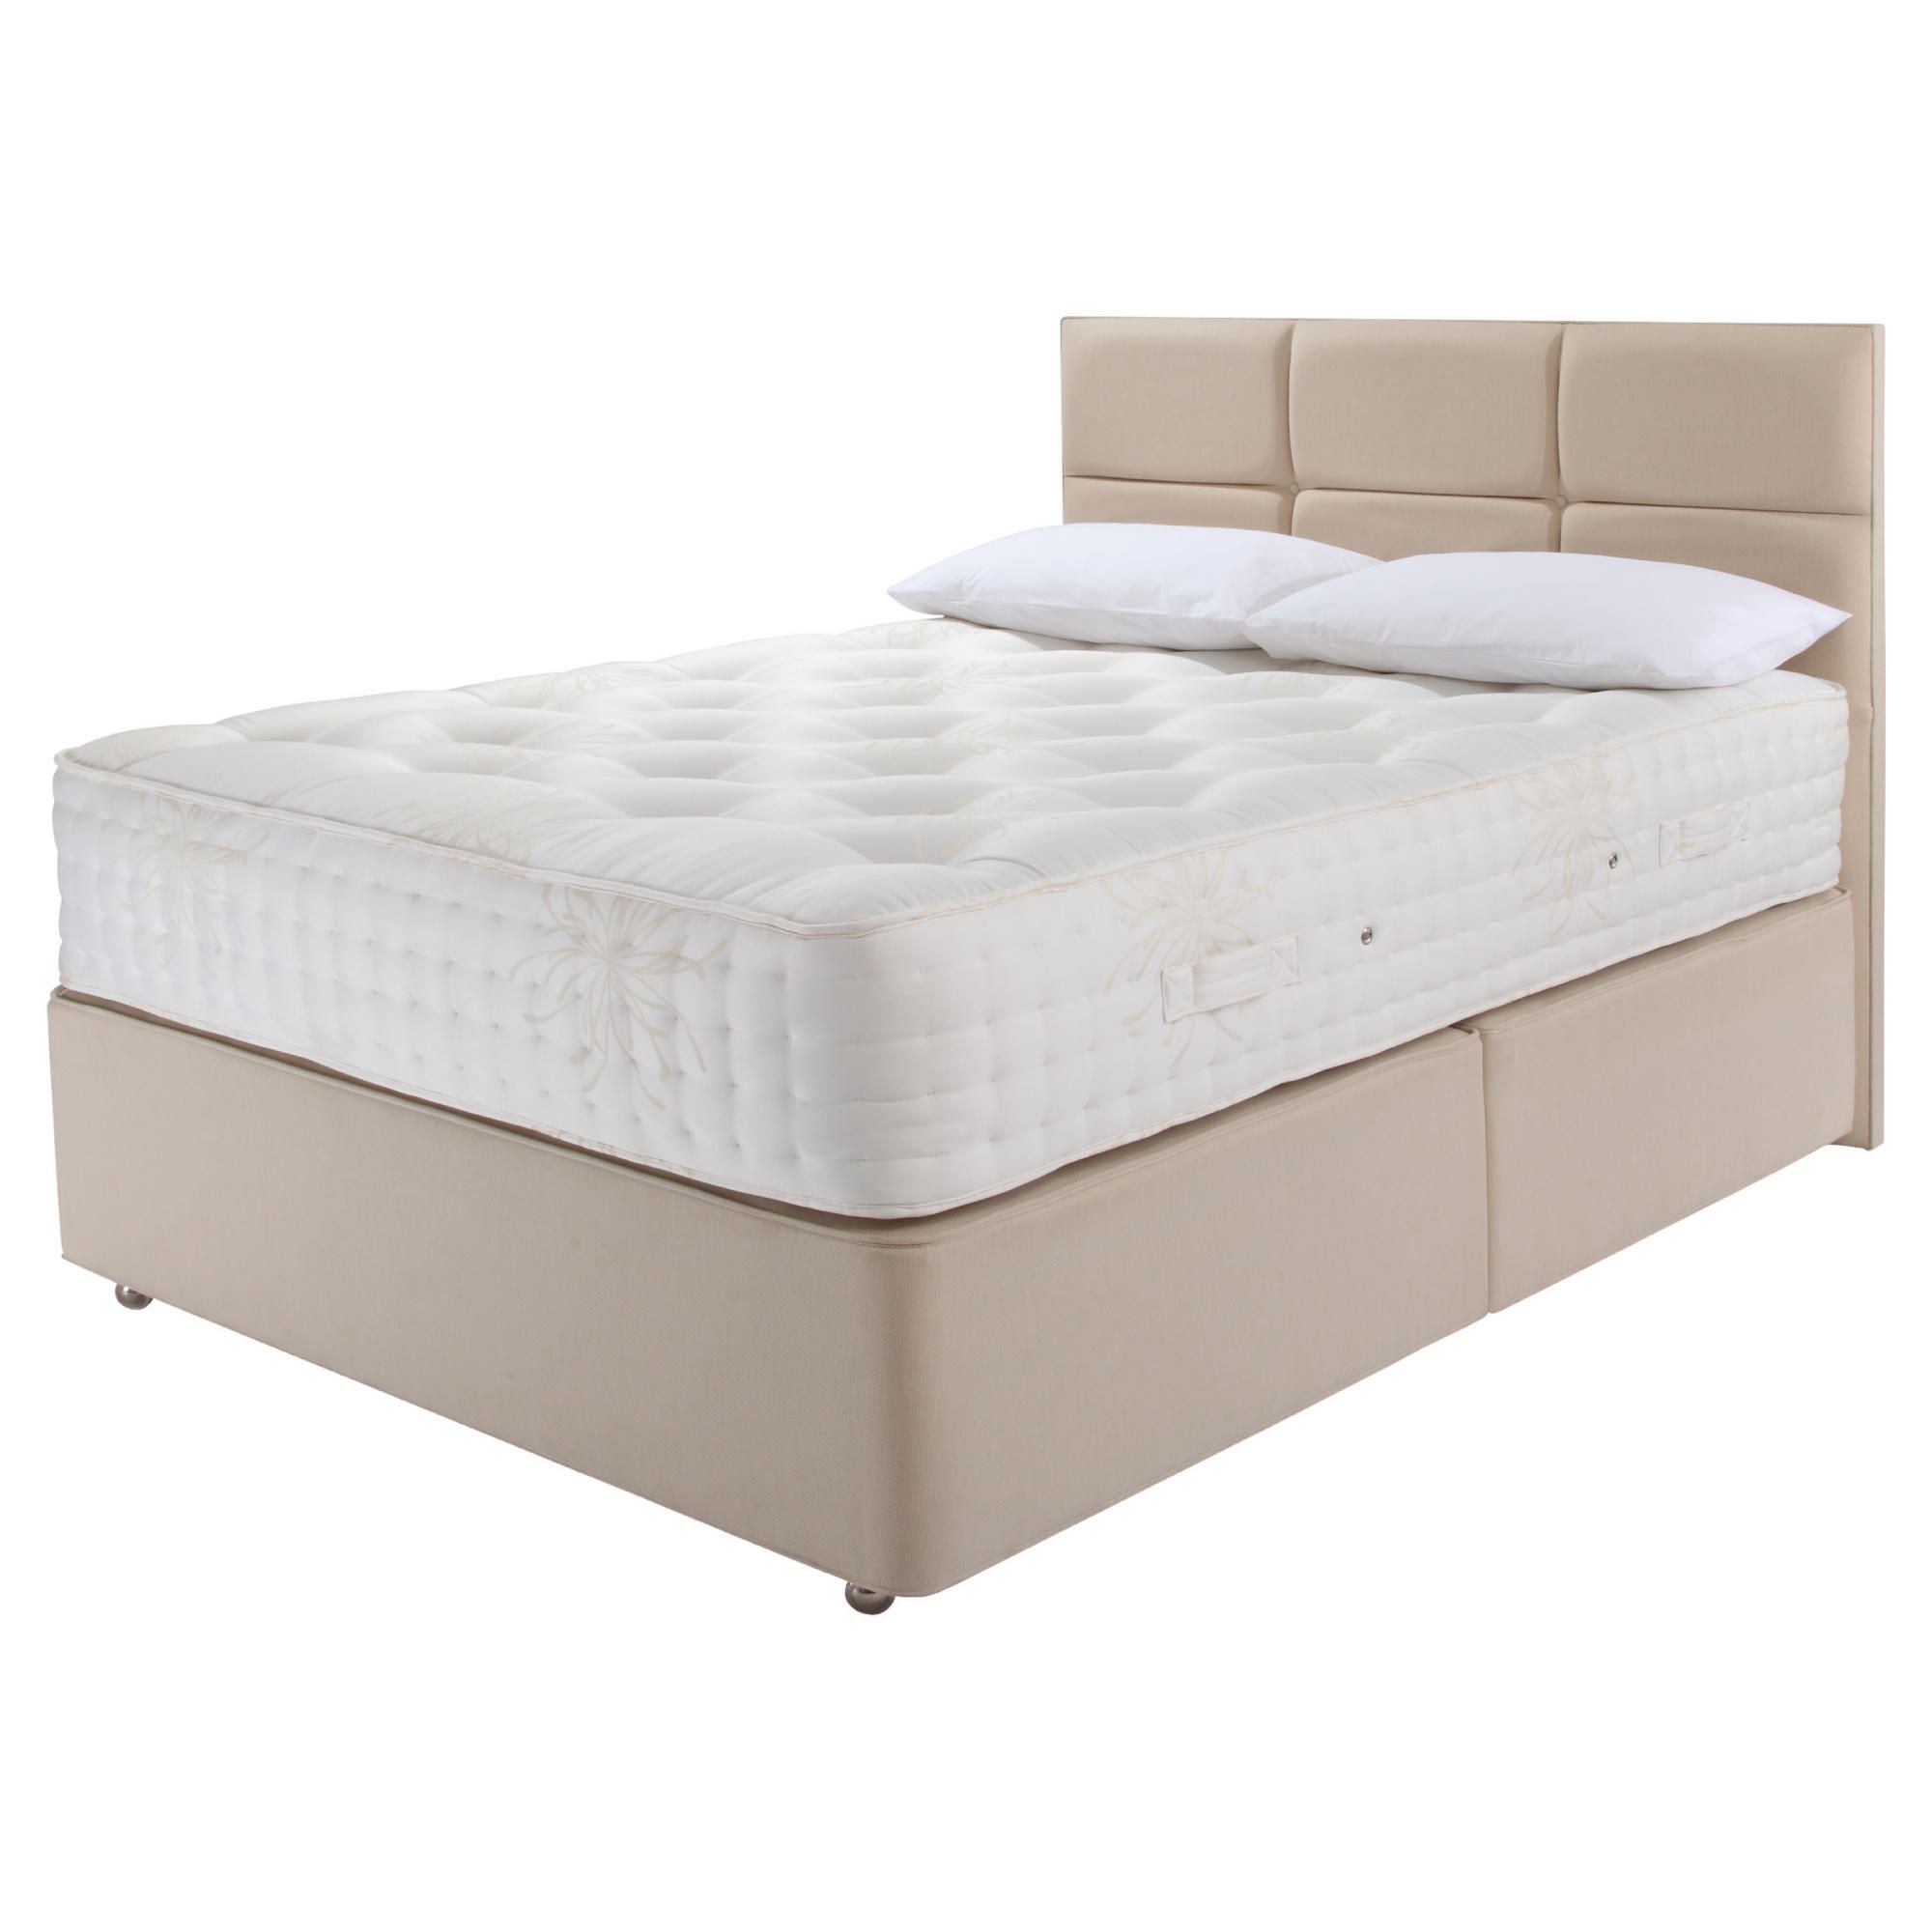 Relyon Luxury 1800 Non Storage Divan Bed Superking at Tesco Direct